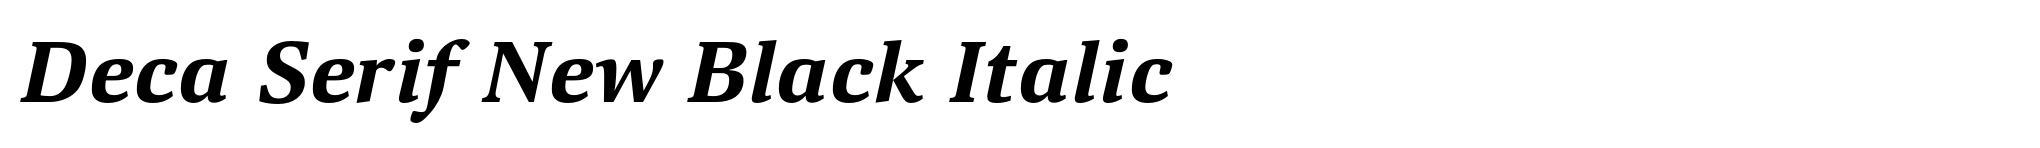 Deca Serif New Black Italic image